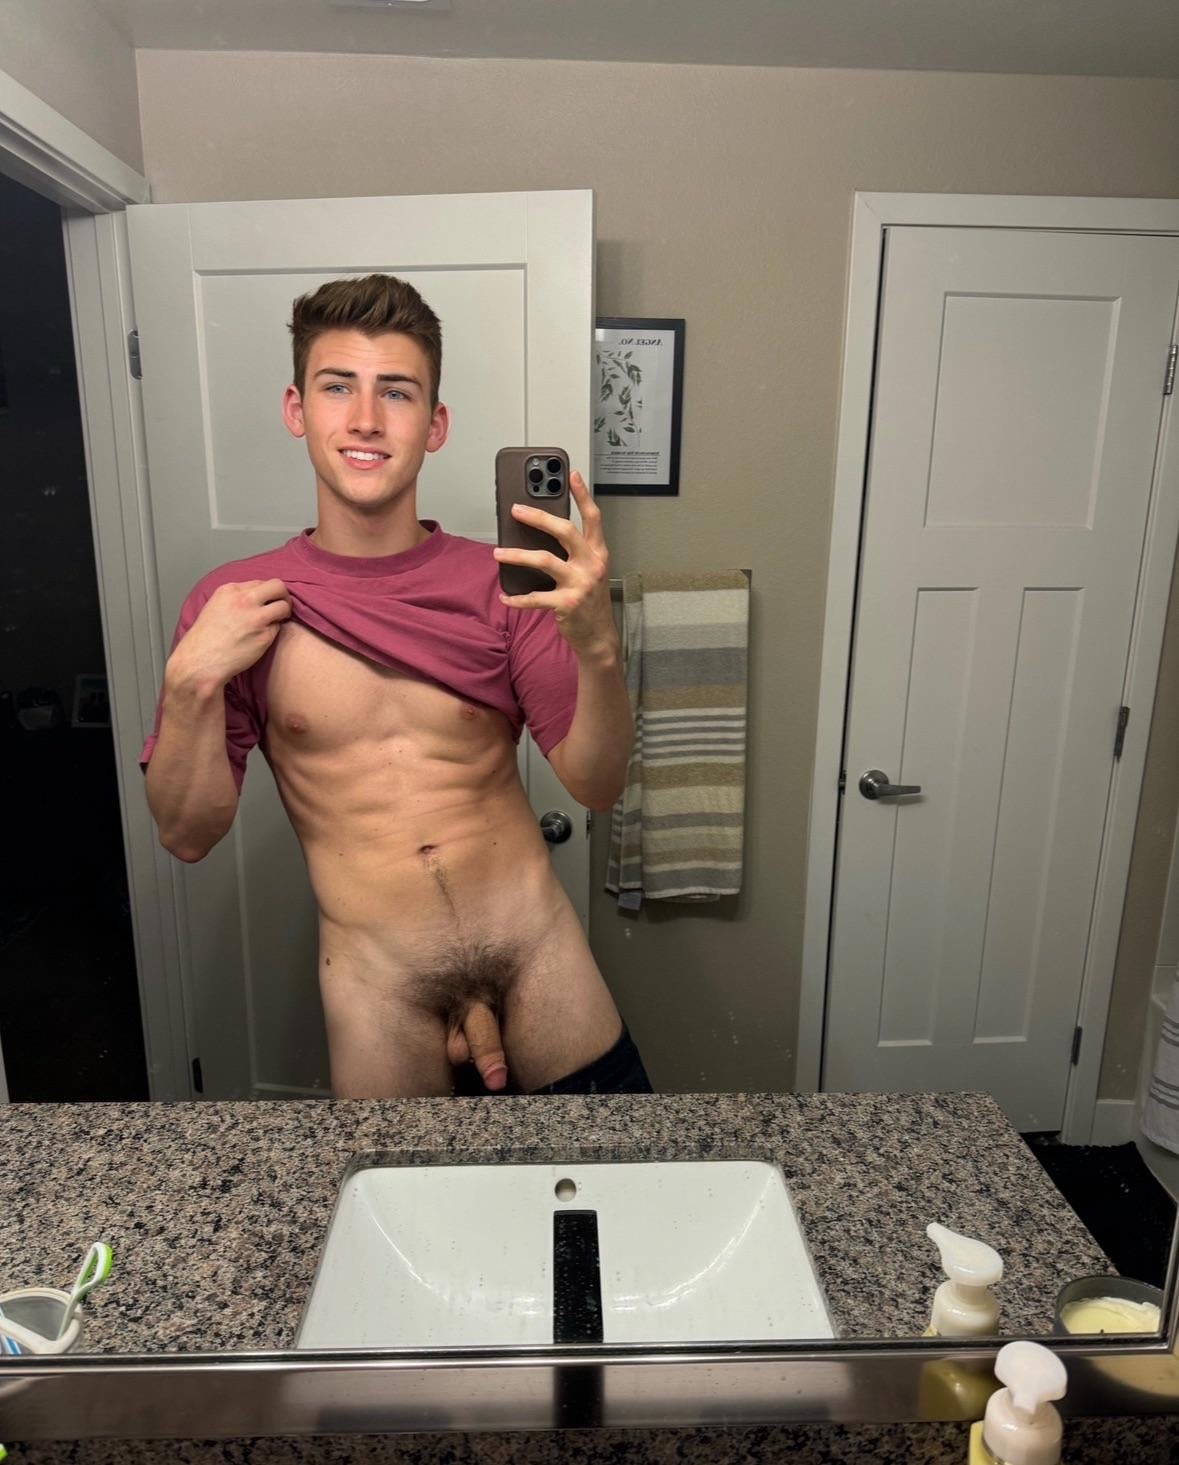 jackson-gay-porn-star-fucking-hot.jpeg